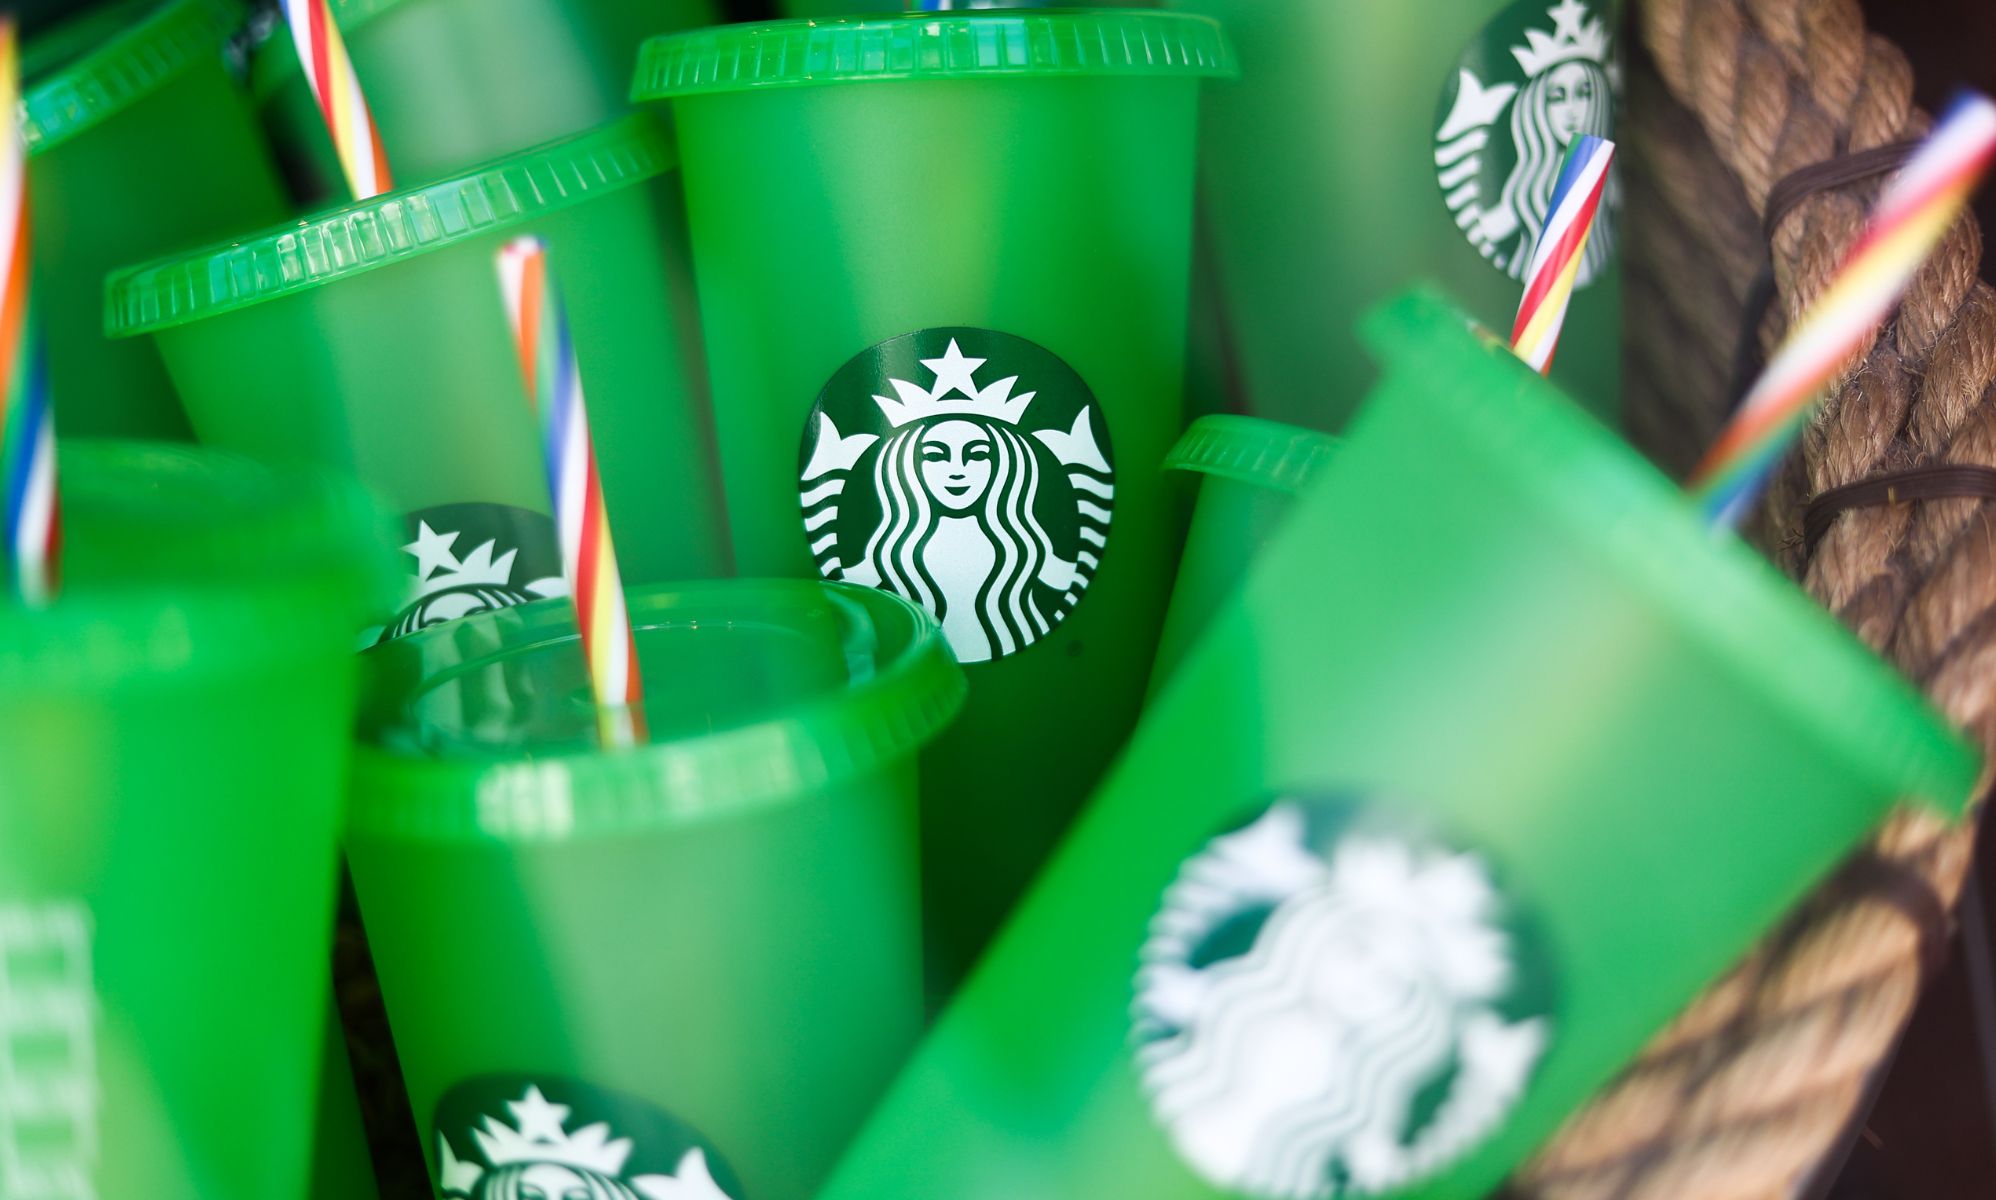 Starbucks Denies Banning Lgbtq Pride Decorations In Stores 